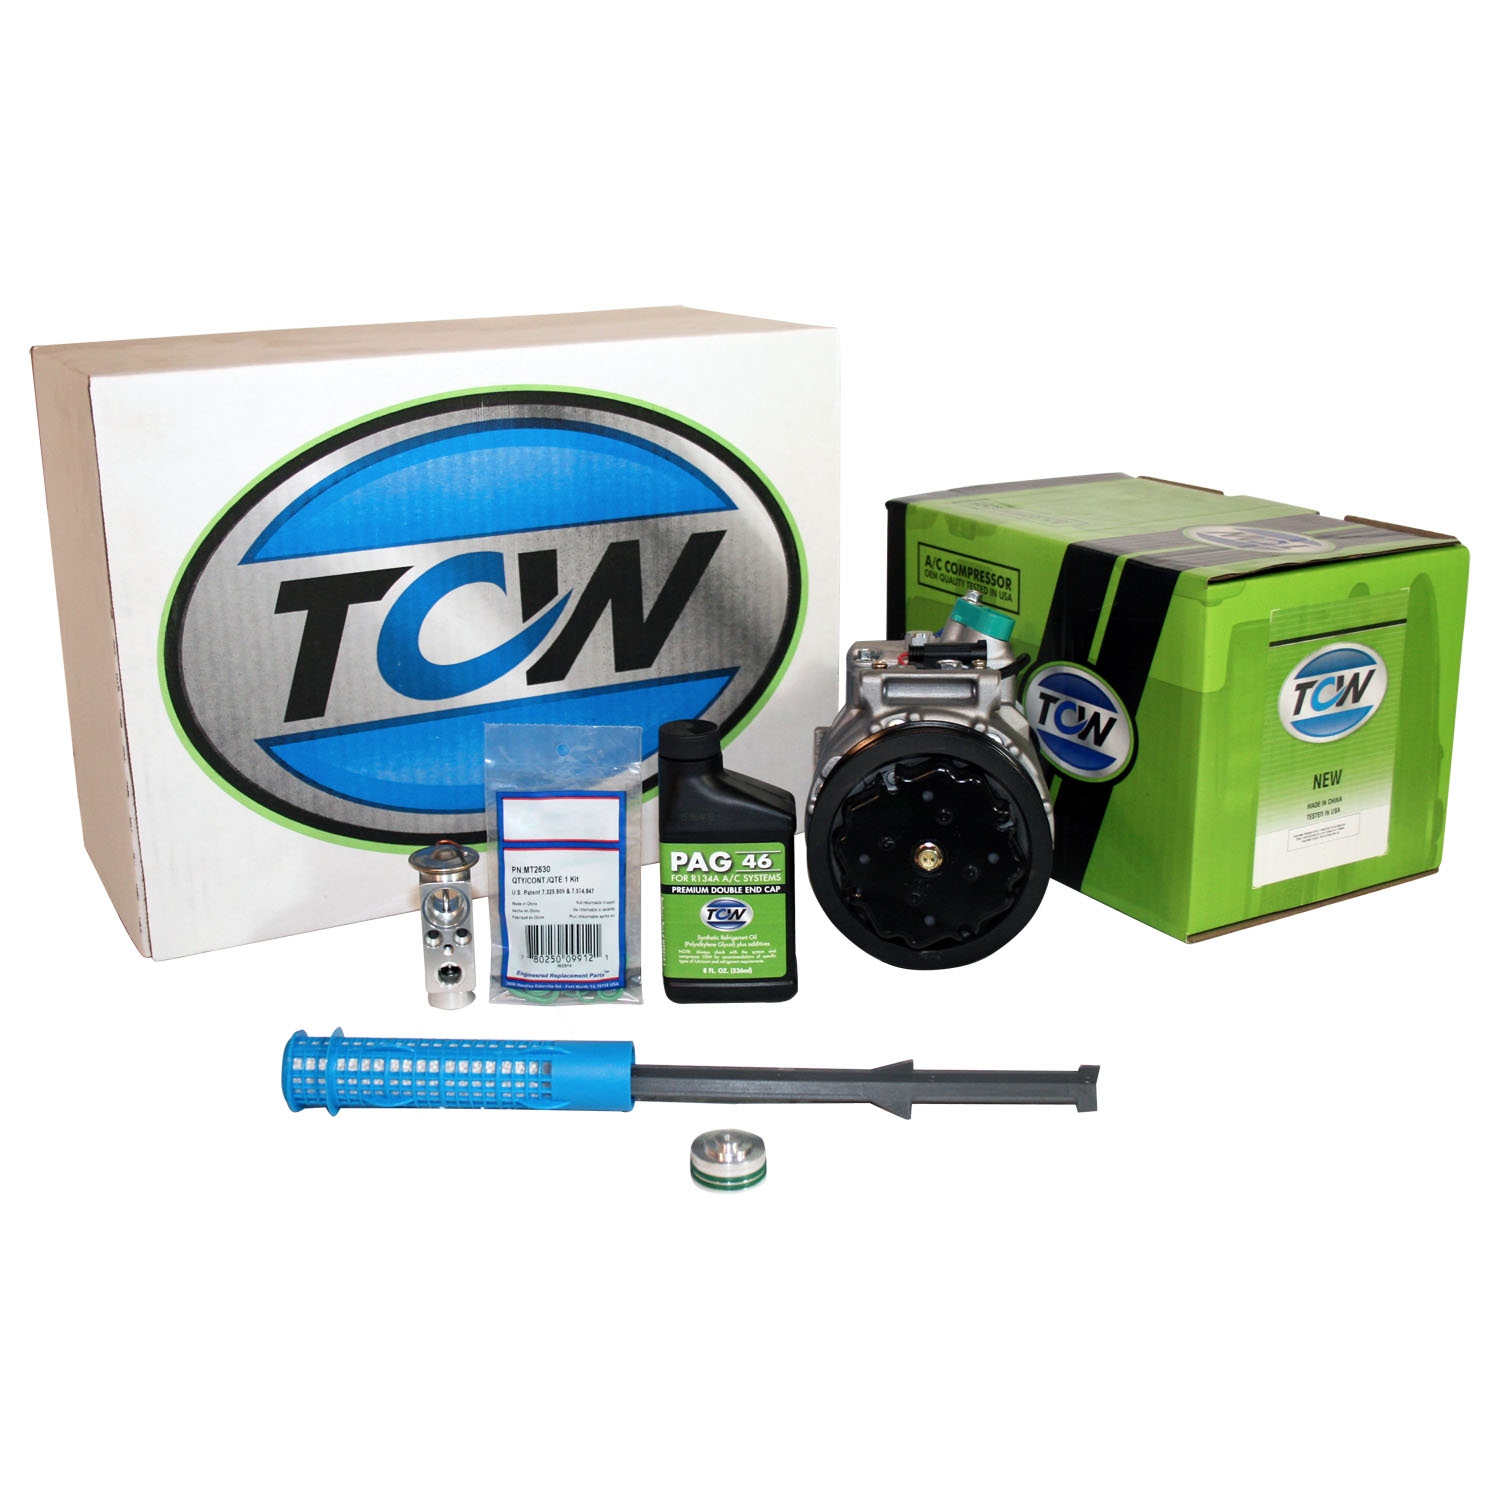 TCW Vehicle A/C Kit K1000419N New Product Image field_60b6a13a6e67c